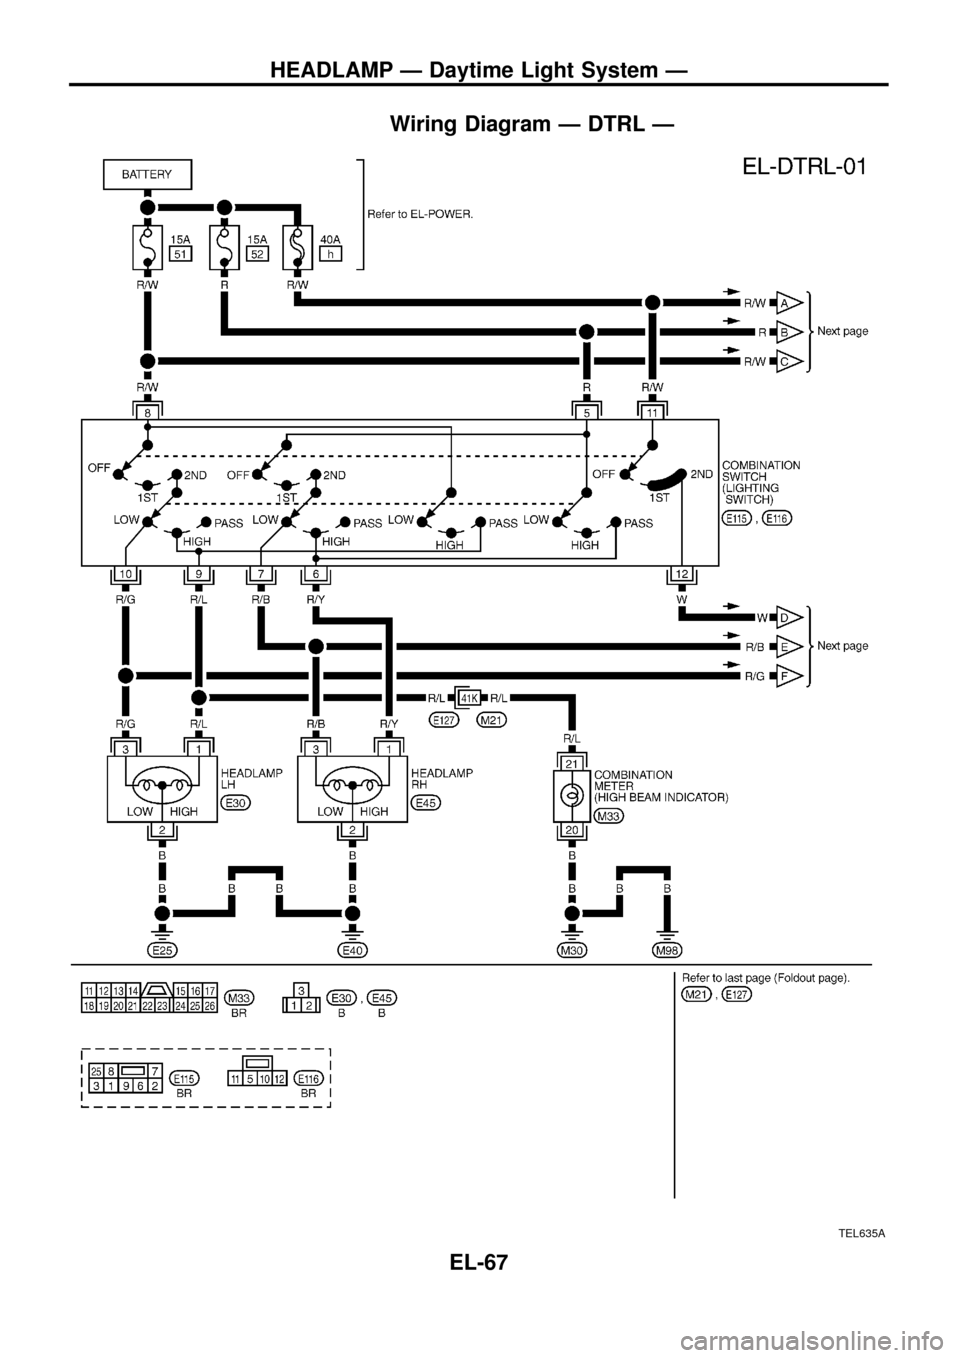 NISSAN PATROL 1998 Y61 / 5.G Electrical System User Guide Wiring Diagram Ð DTRL Ð
TEL635A
HEADLAMP Ð Daytime Light System Ð
EL-67 